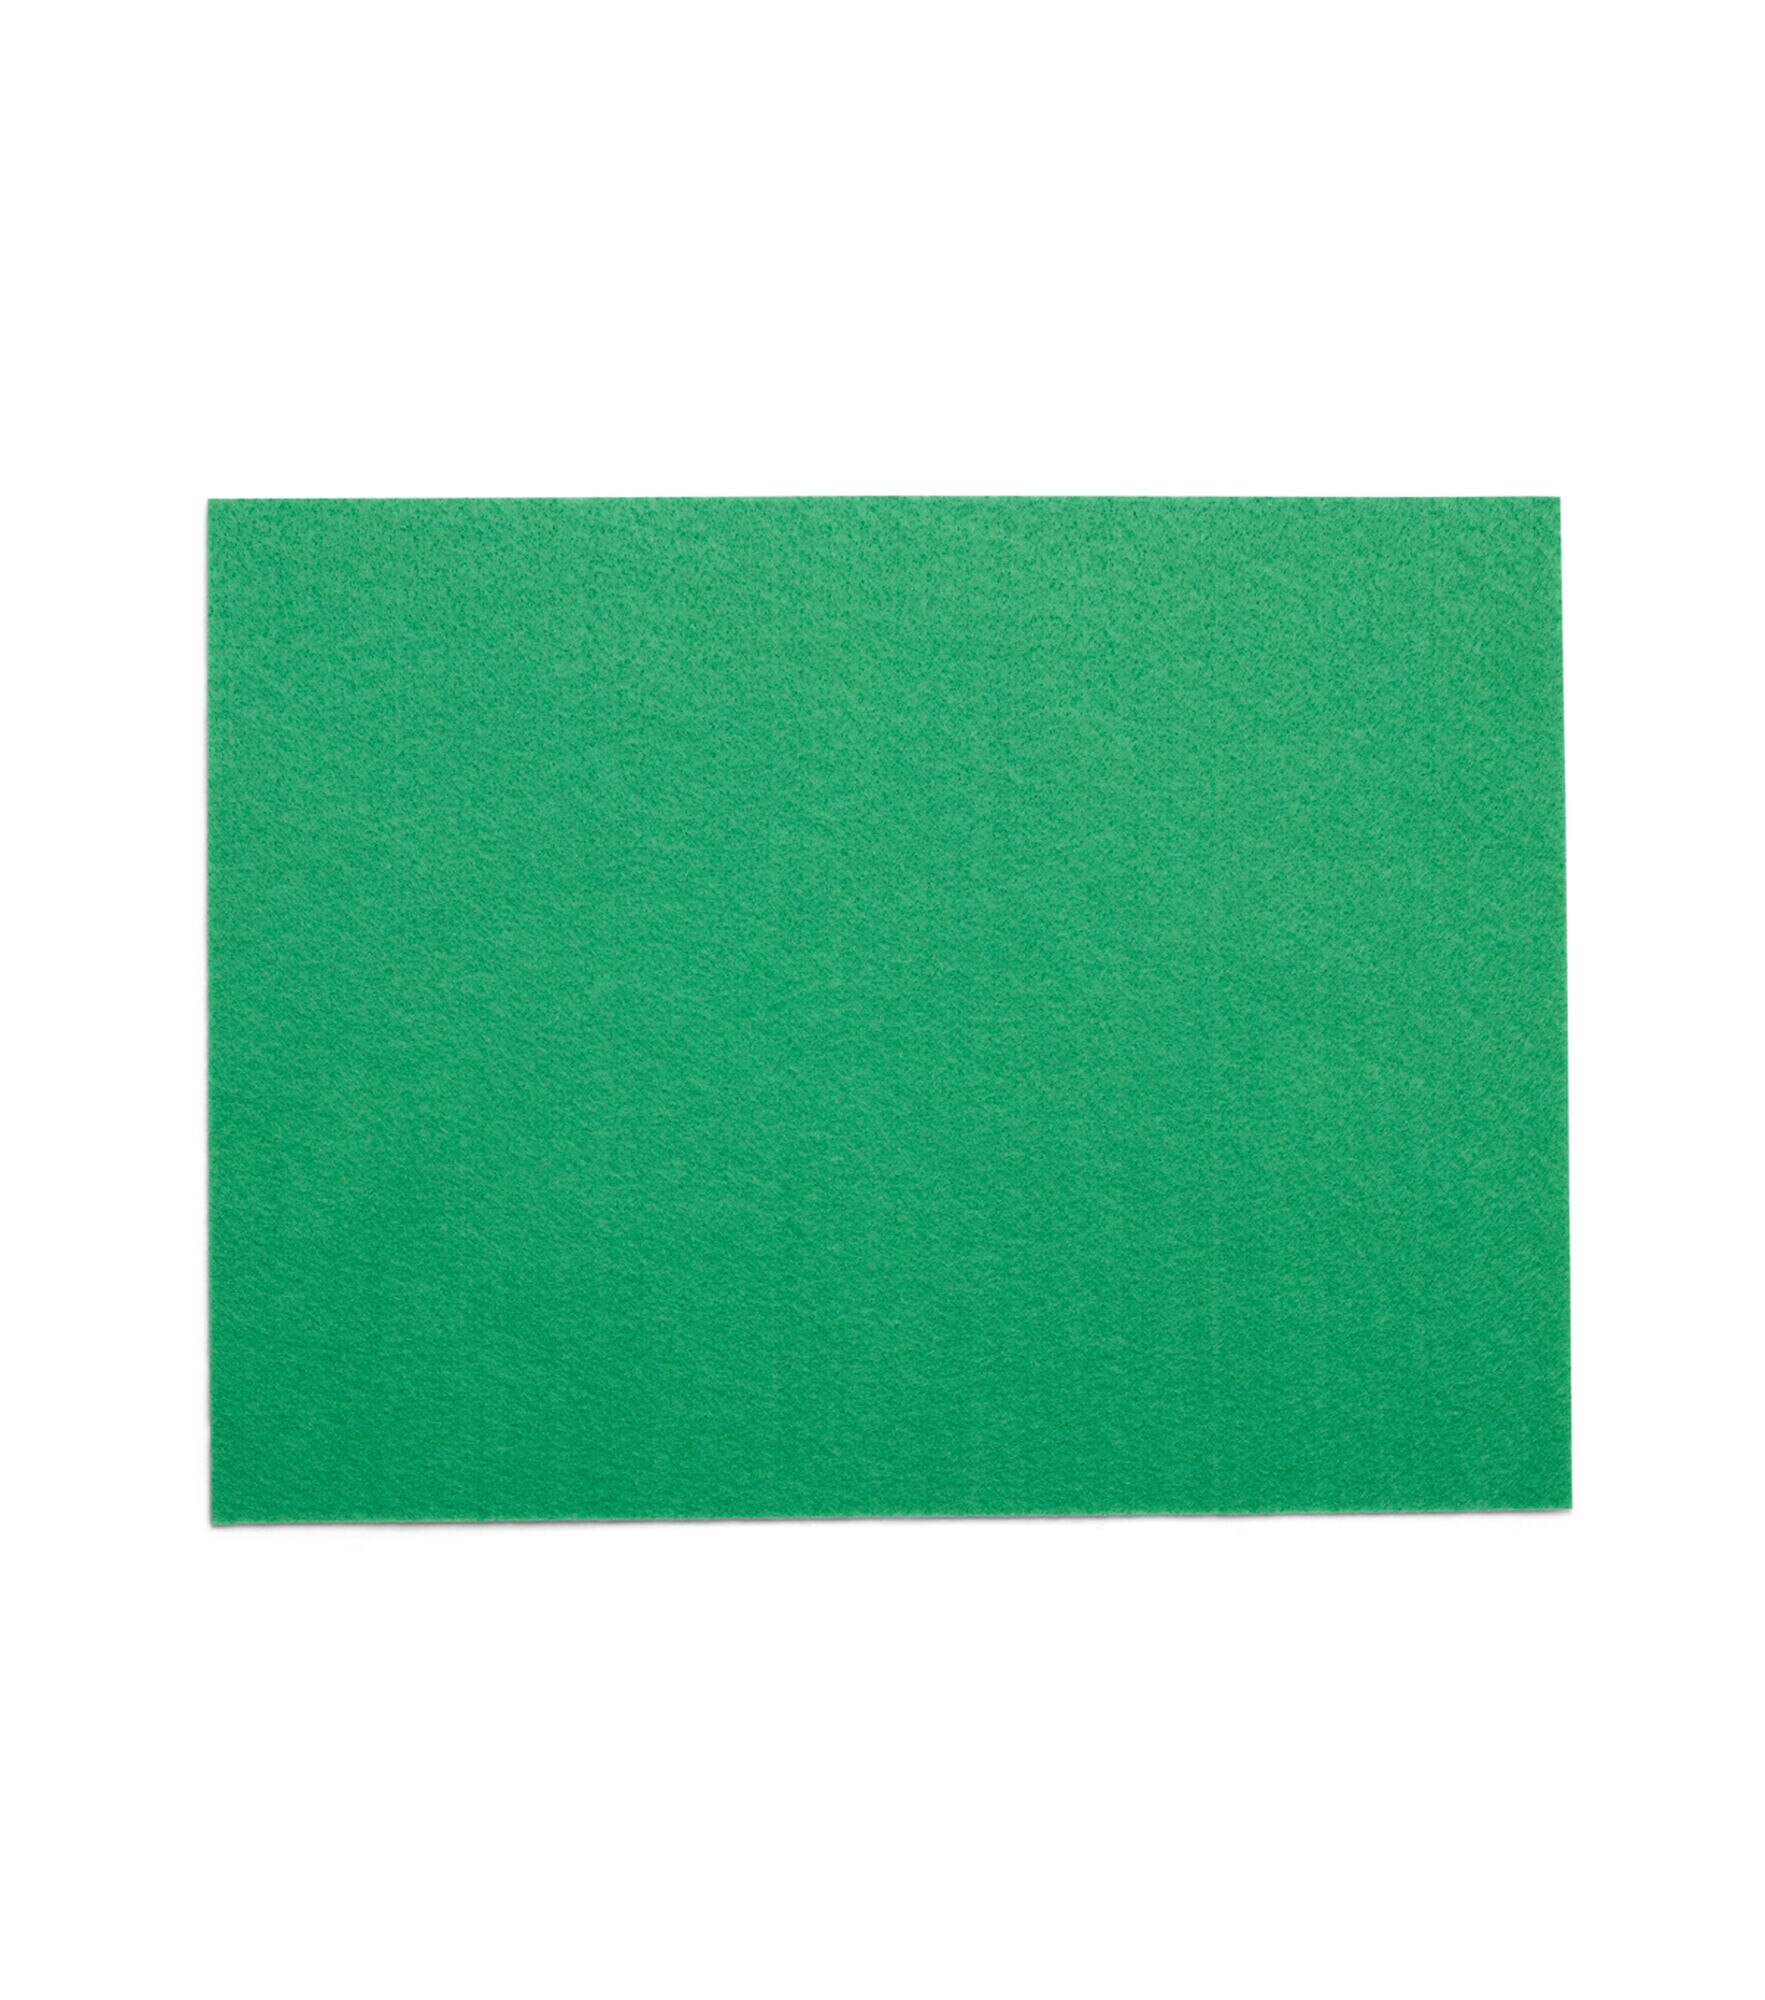 Bottle Green Felt Sheets - Polyester Felt